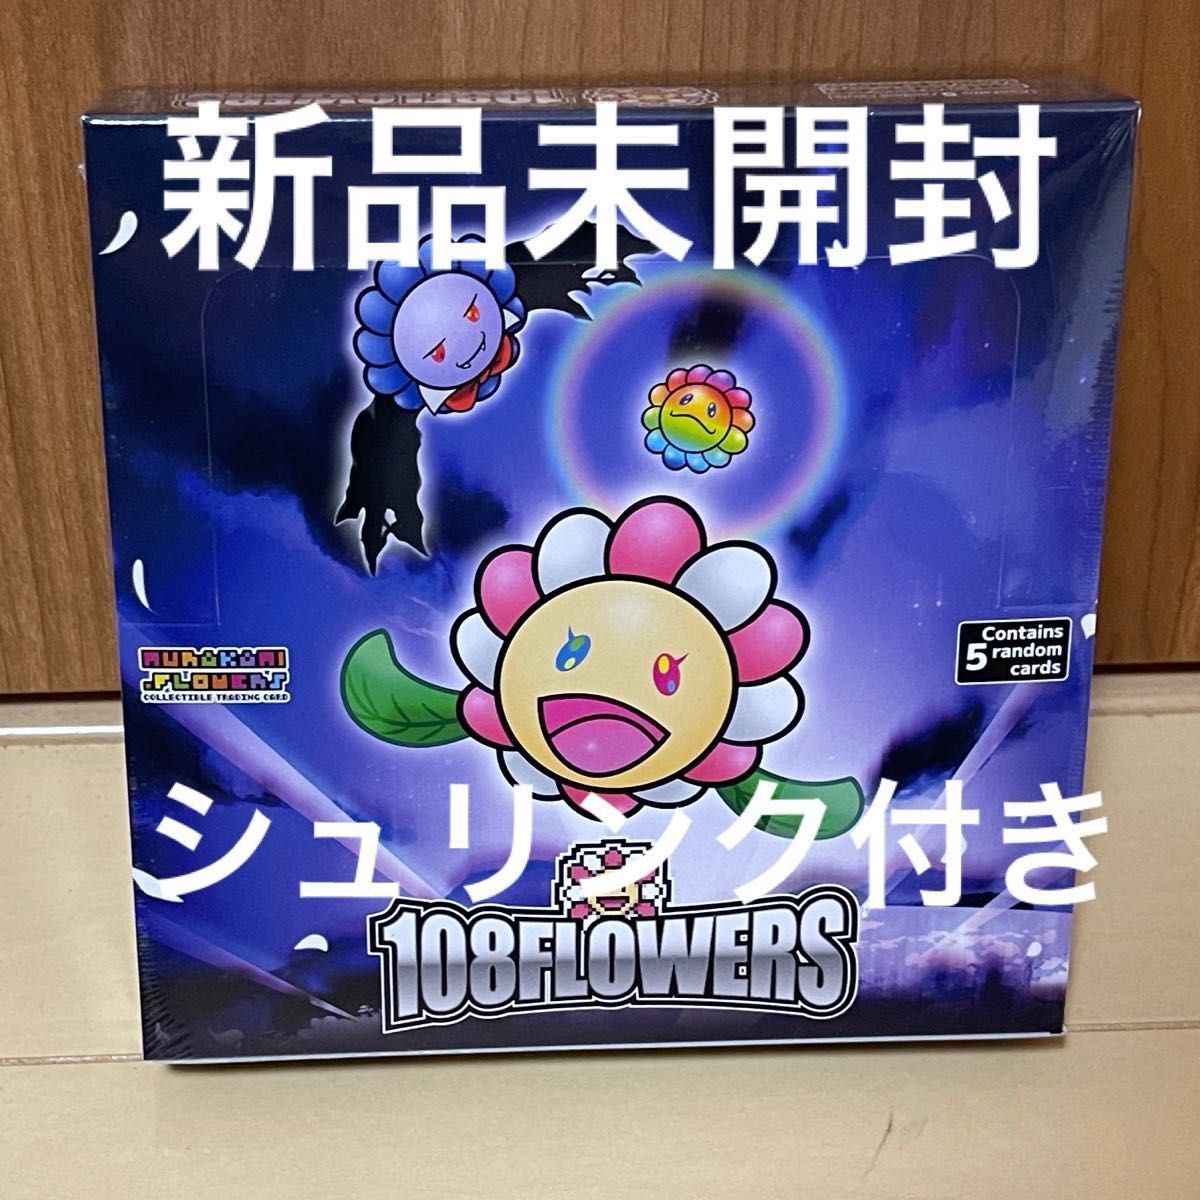 Murakami Flowers Collectible Trading Card -108フラワーズ Box